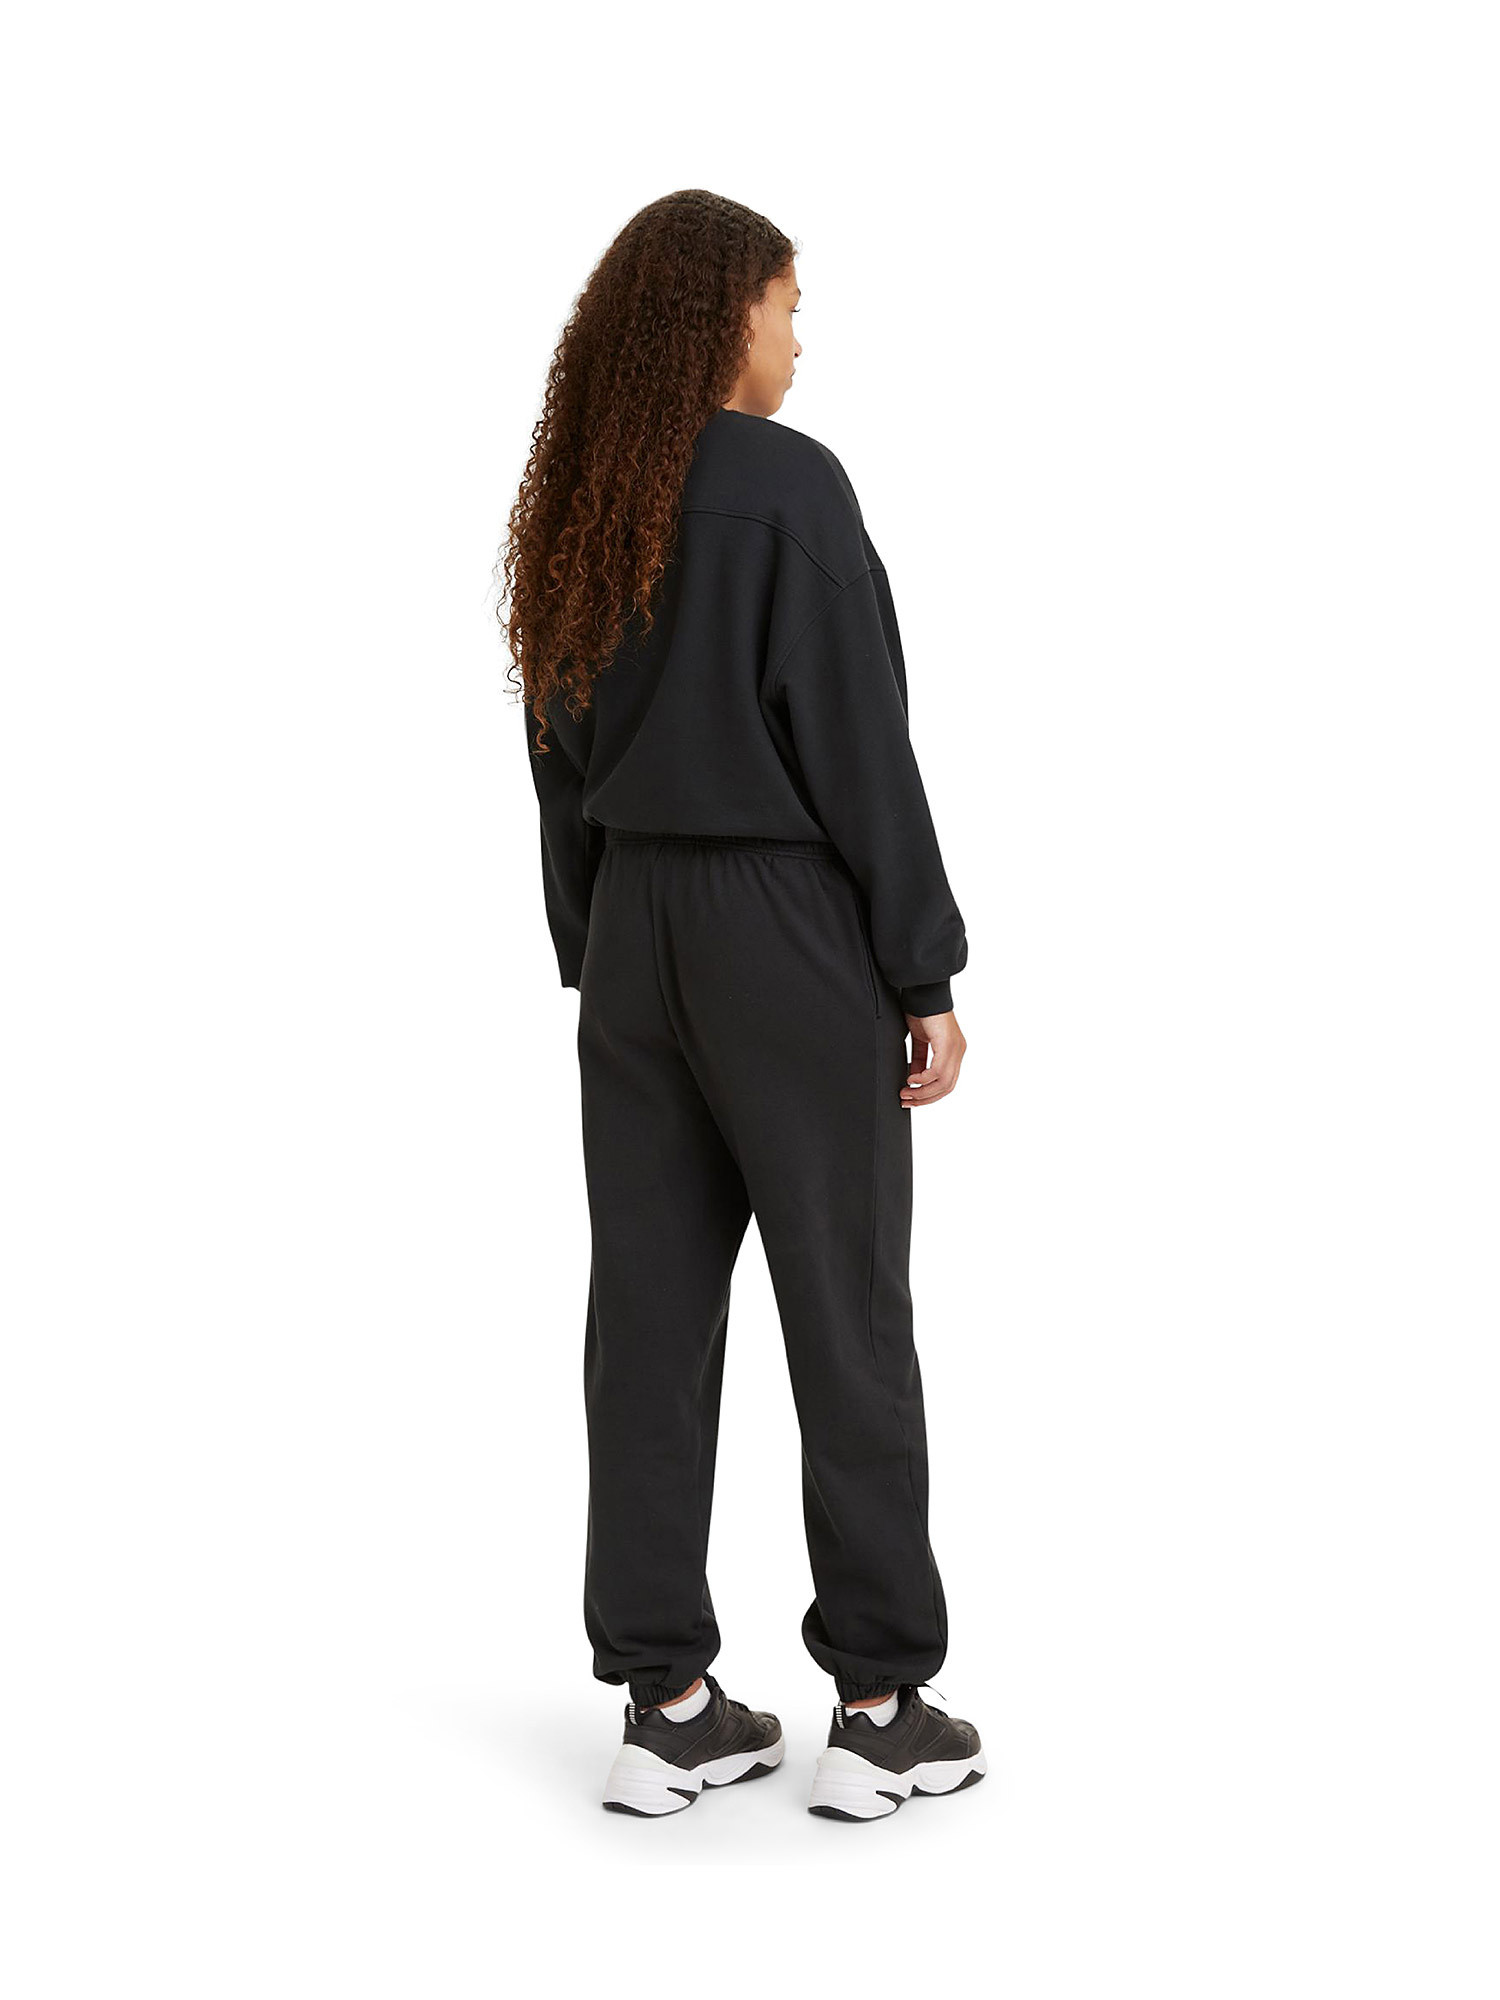 WFH Loungewear sweatpants, Black, large image number 4